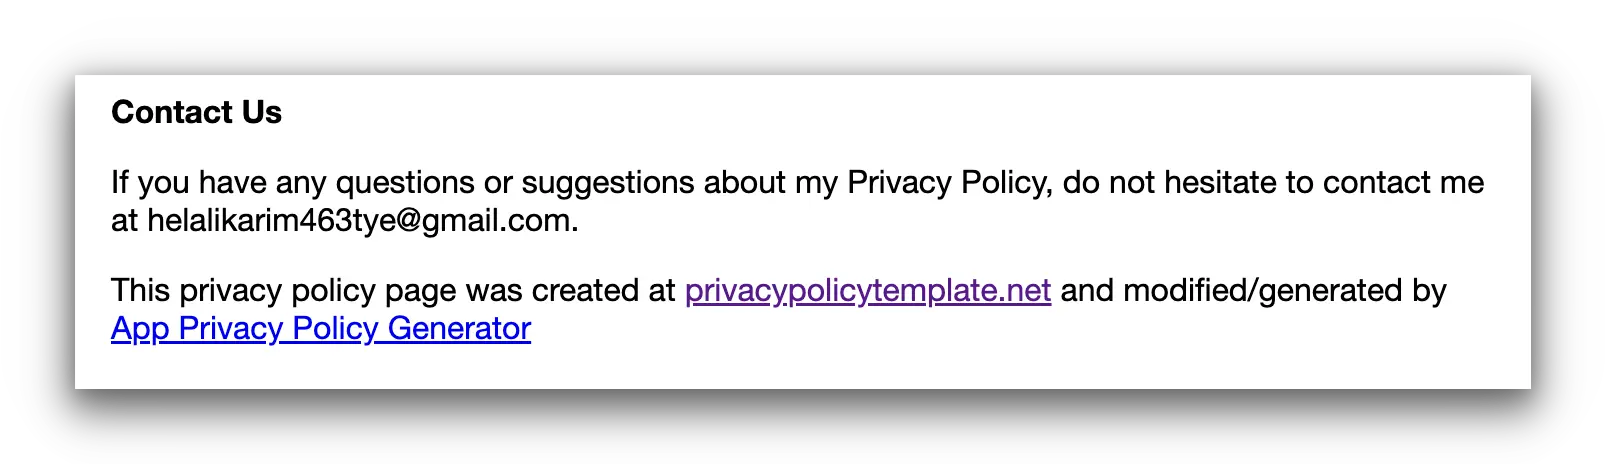 Hong Kong VPN's awful privacy policy